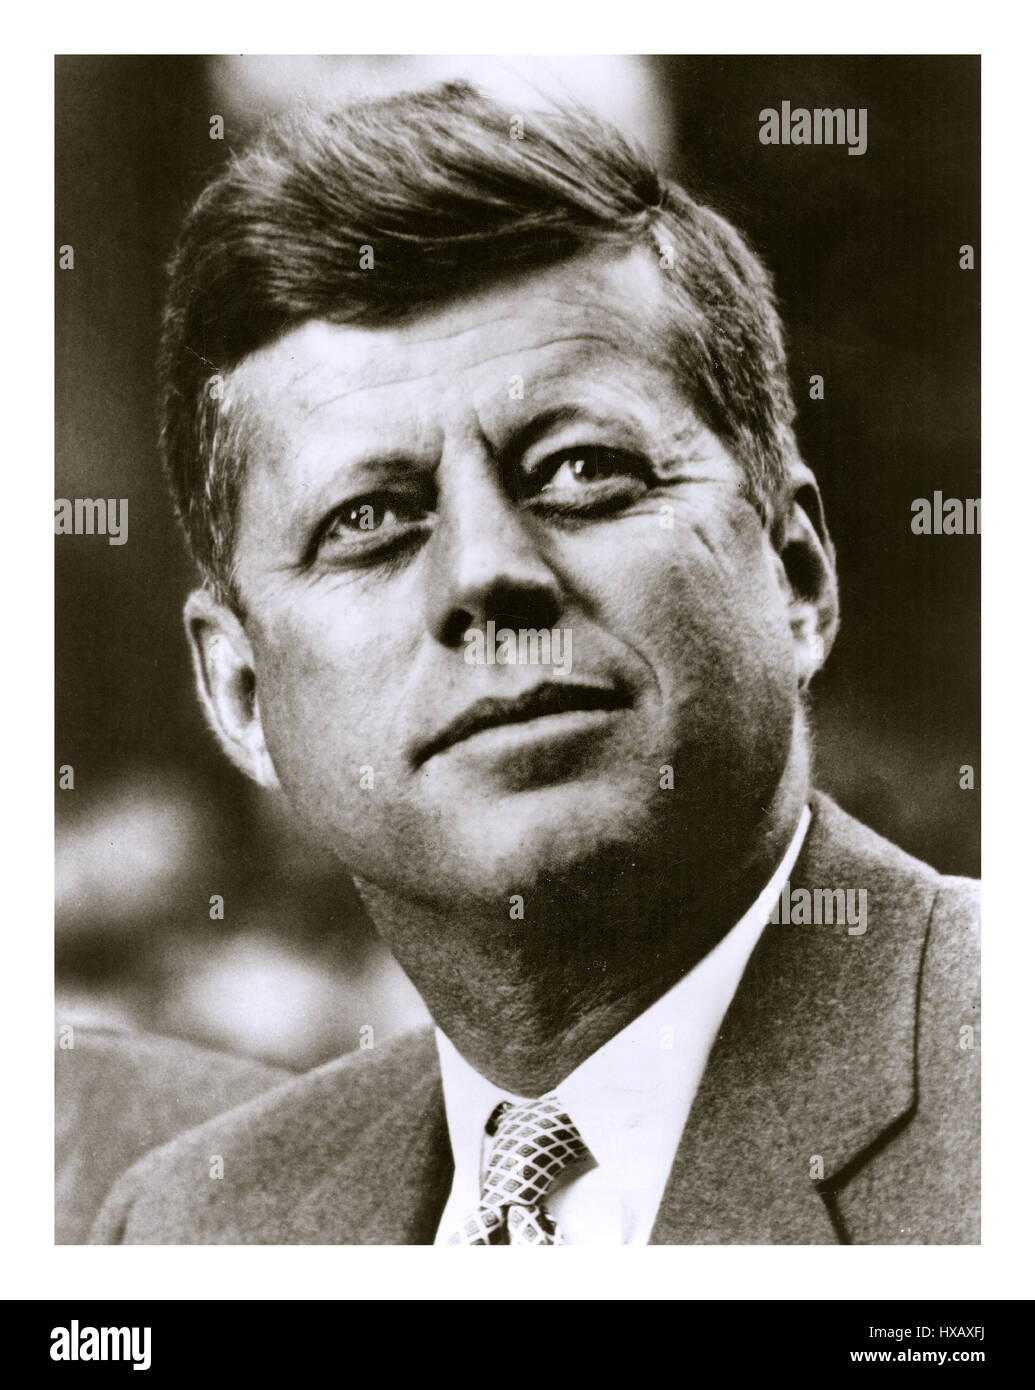 President John F. Kennedy Sept 1961 Informal head and shoulder b&w portrait exterior outdoors. Stock Photo